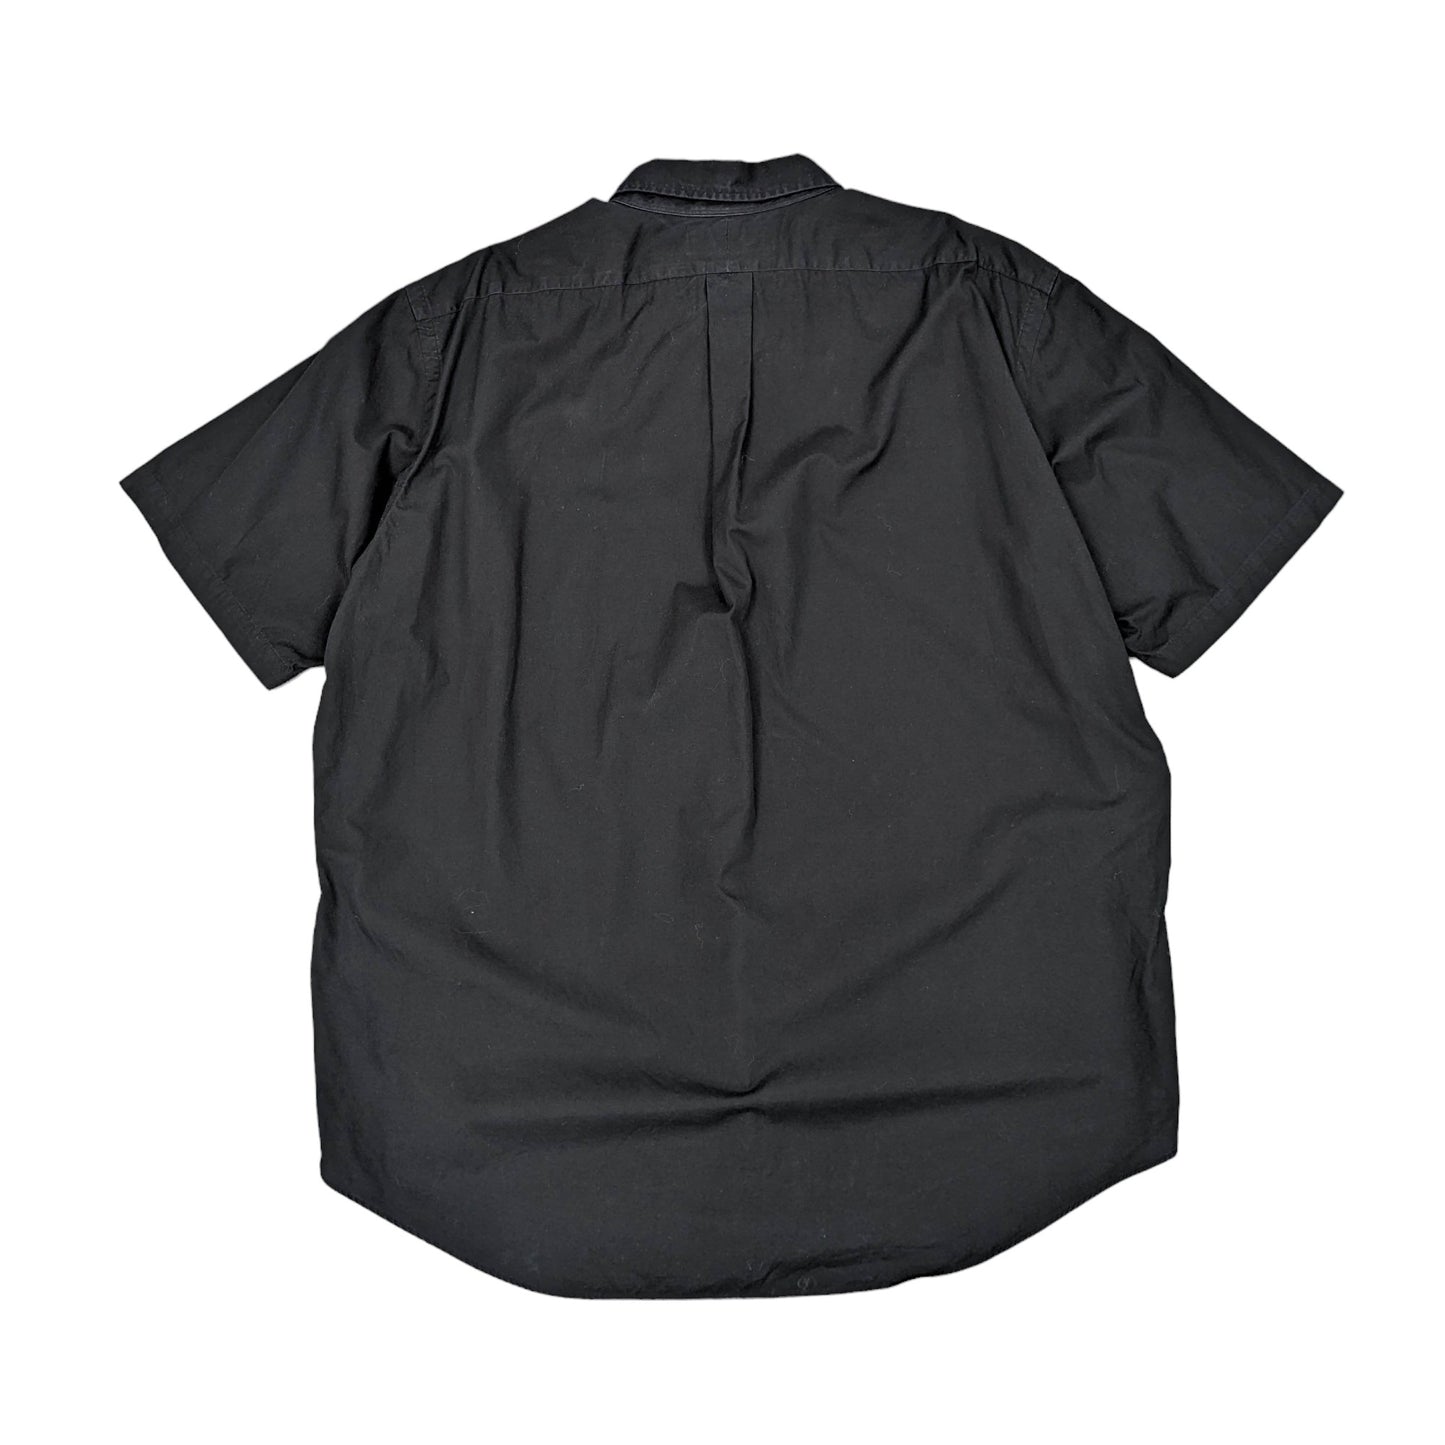 Ralph Lauren S/S Classic Fit Shirt Size XXL